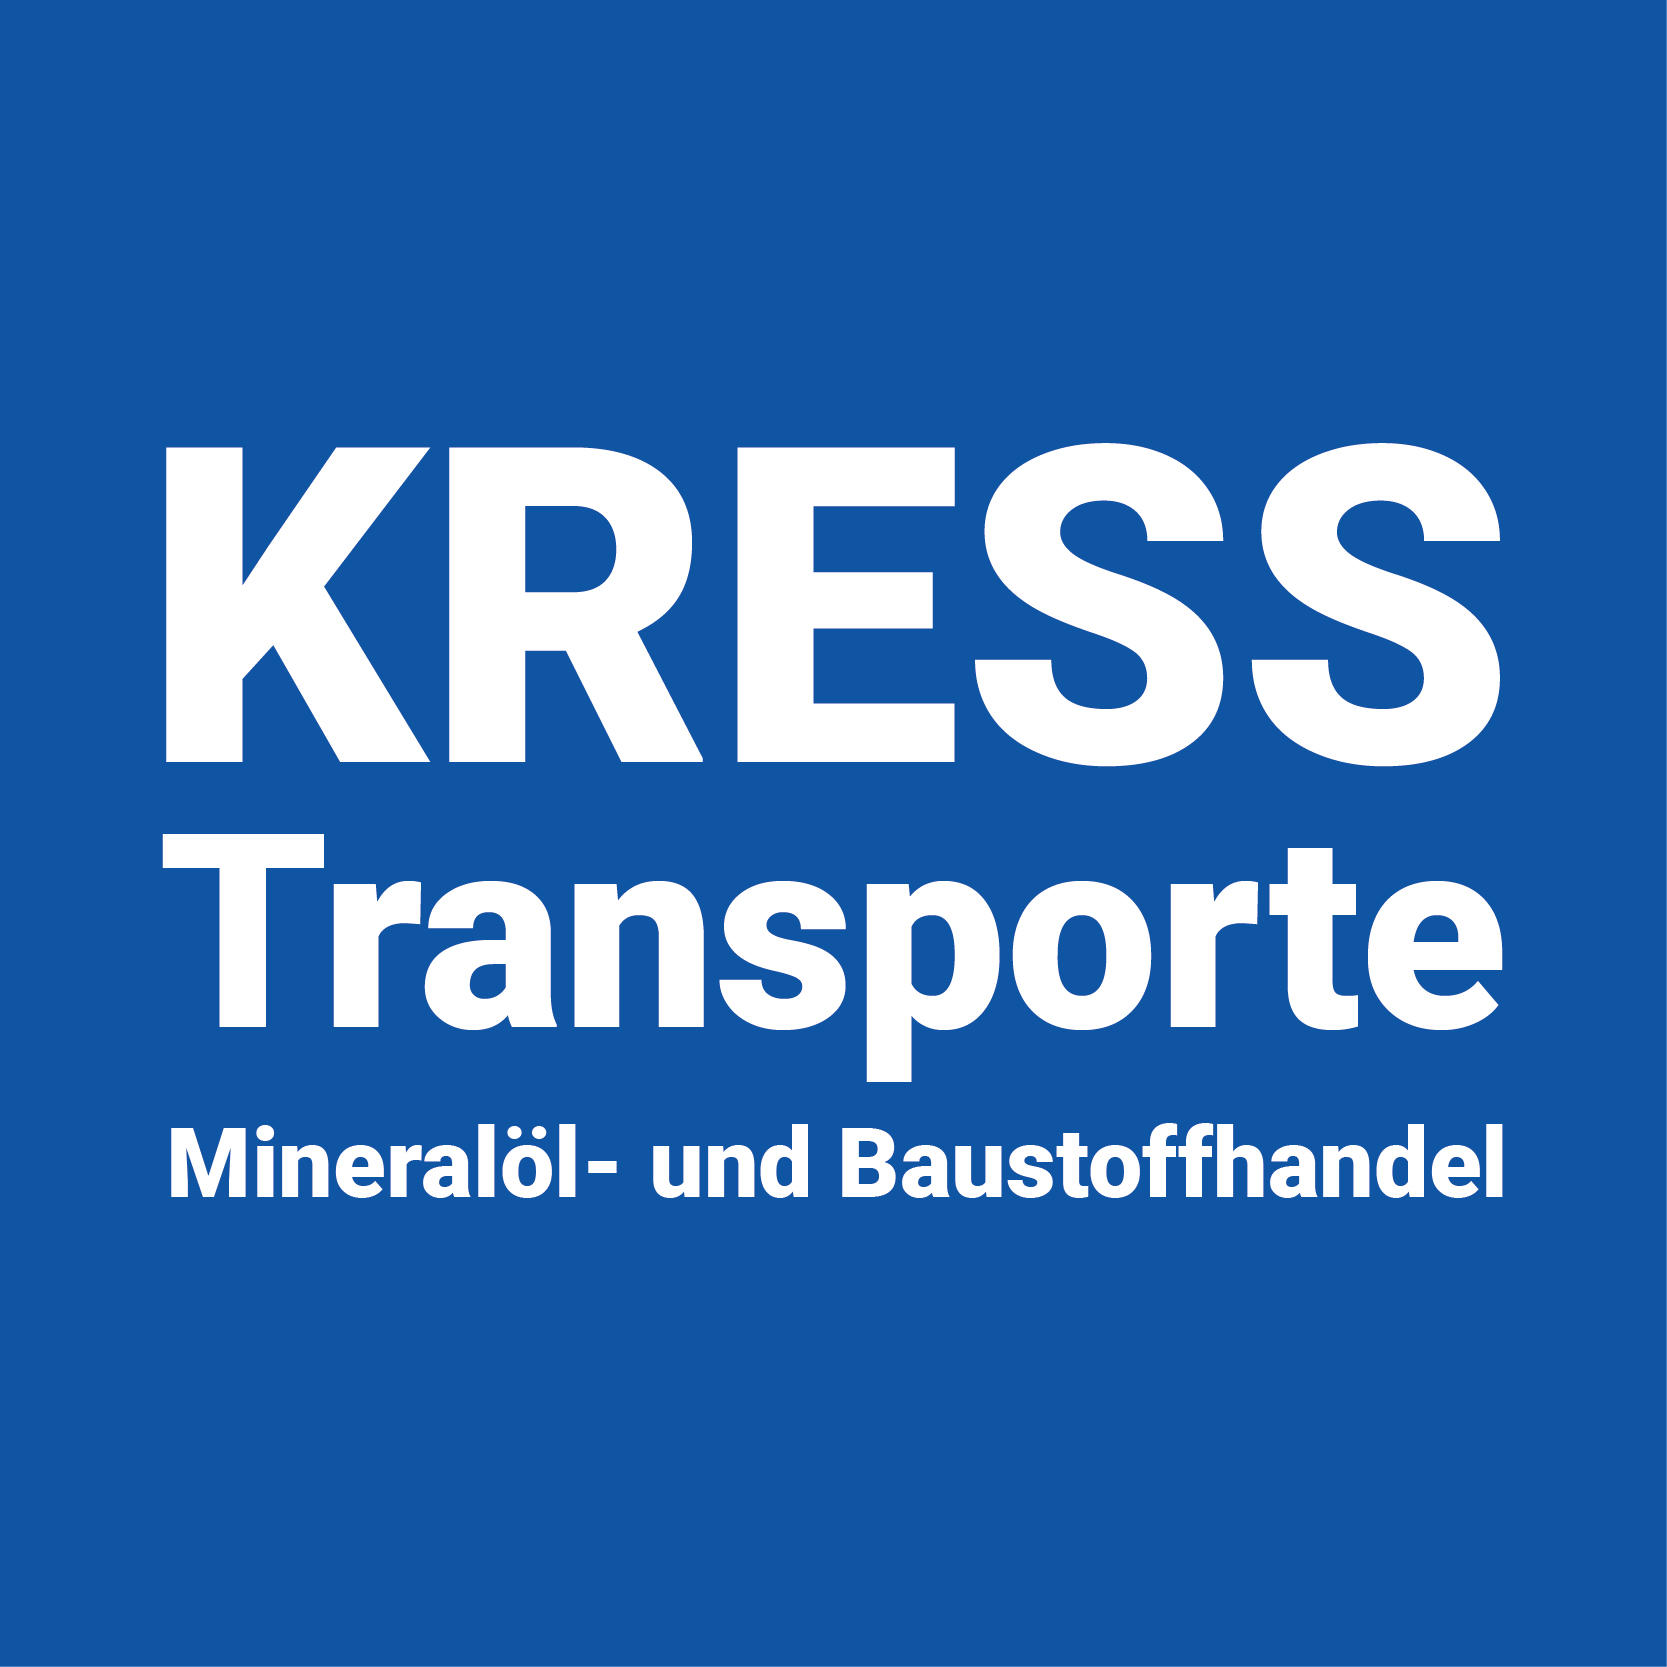 Kress Transporte Mineralöl- und Baustoffhandel GmbH & Co. KG. Logo